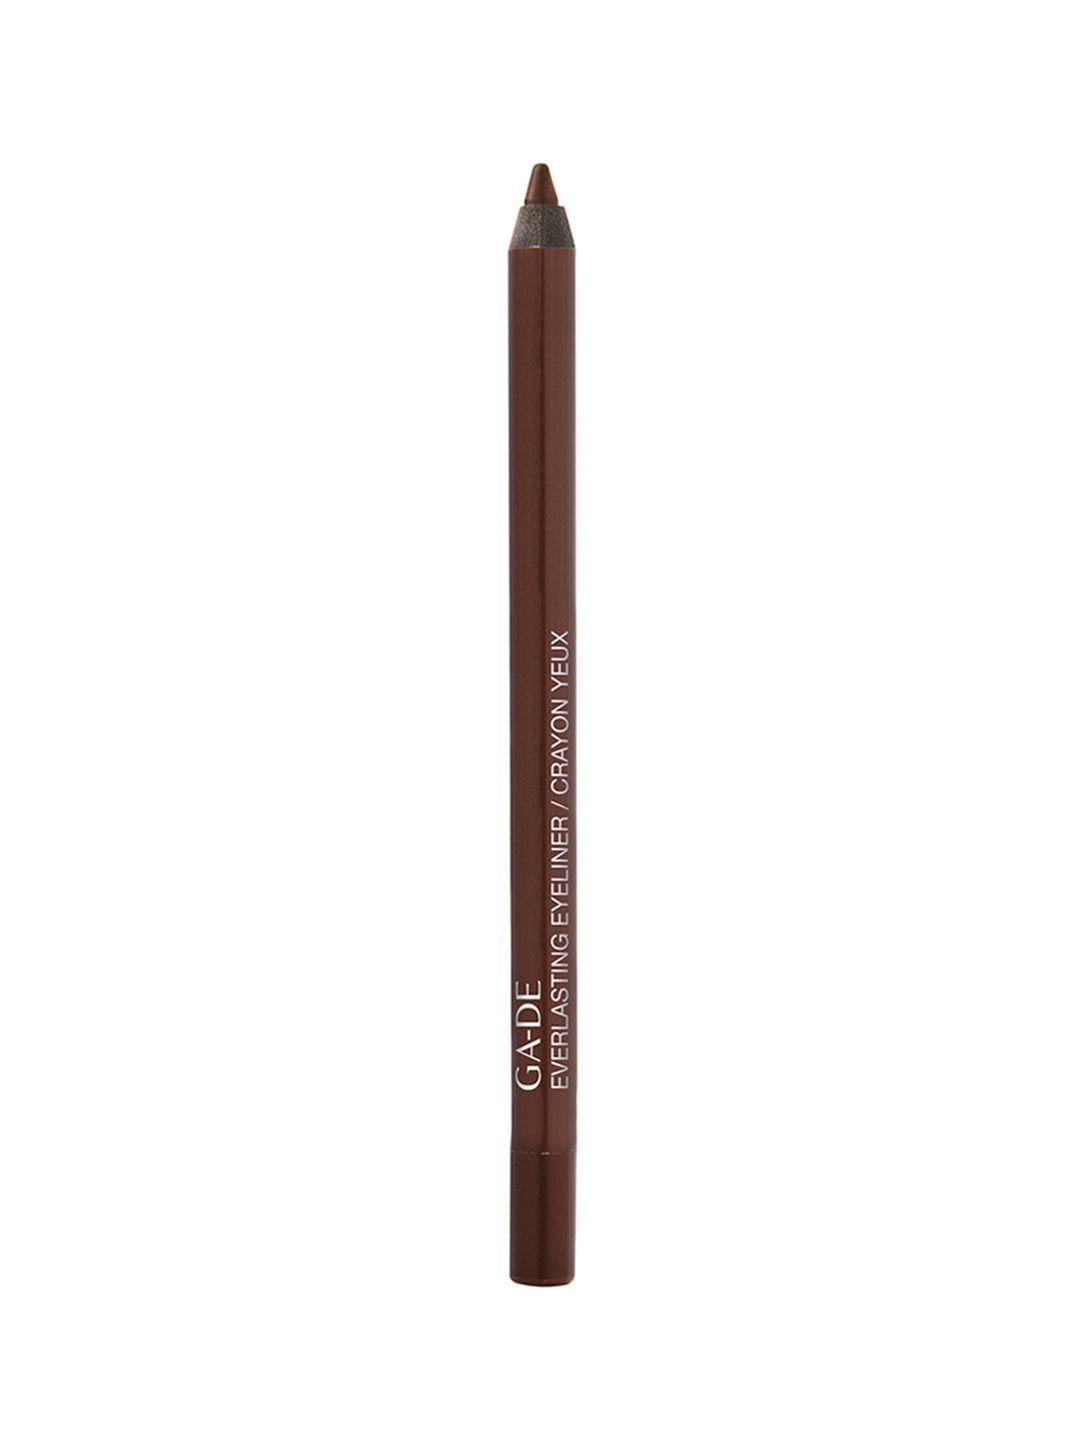 ga-de everlasting long lasting crayon eyeliner - intense brown 303